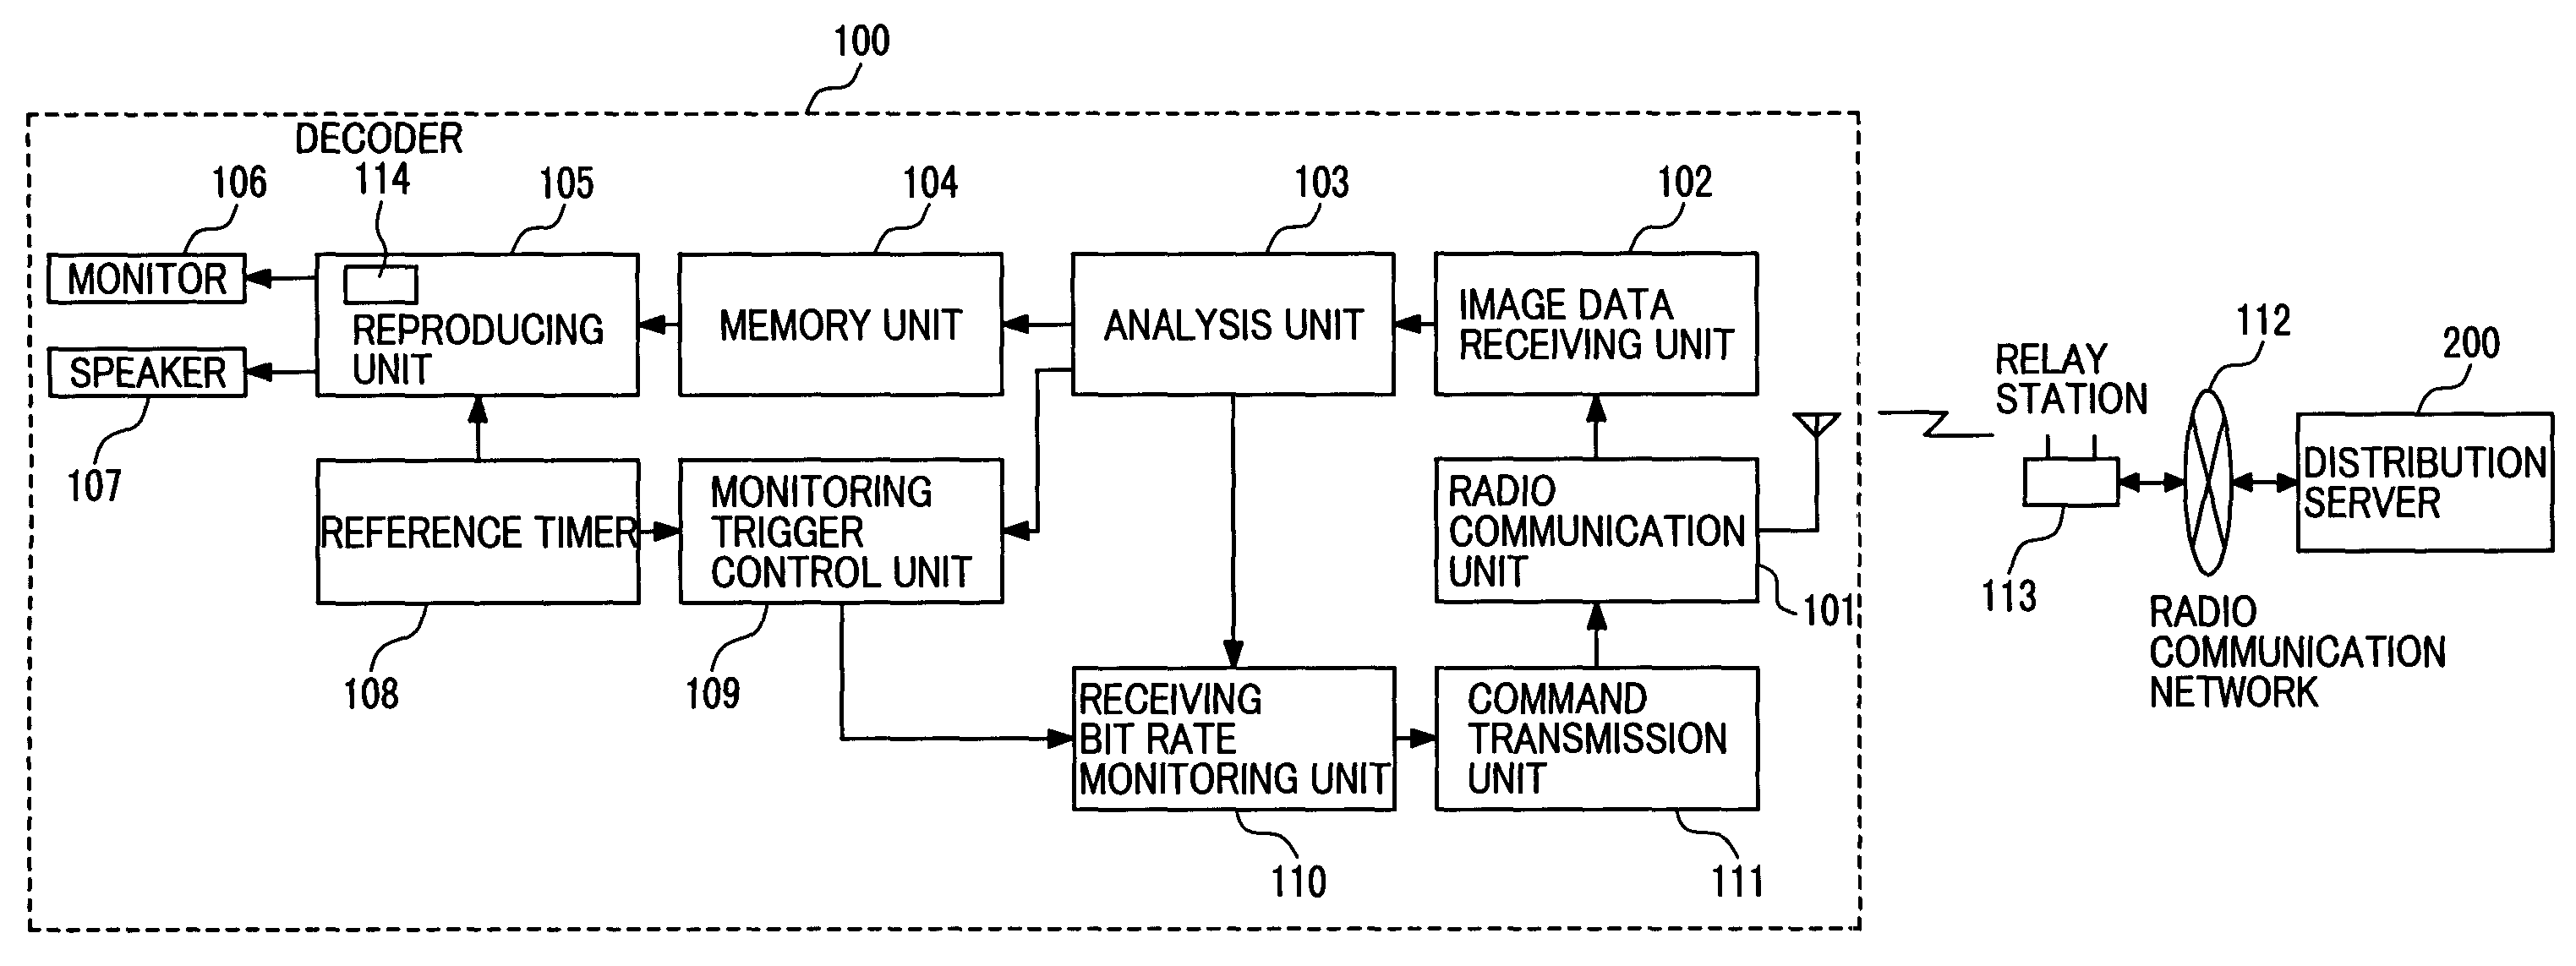 Data distribution server and terminal apparatus